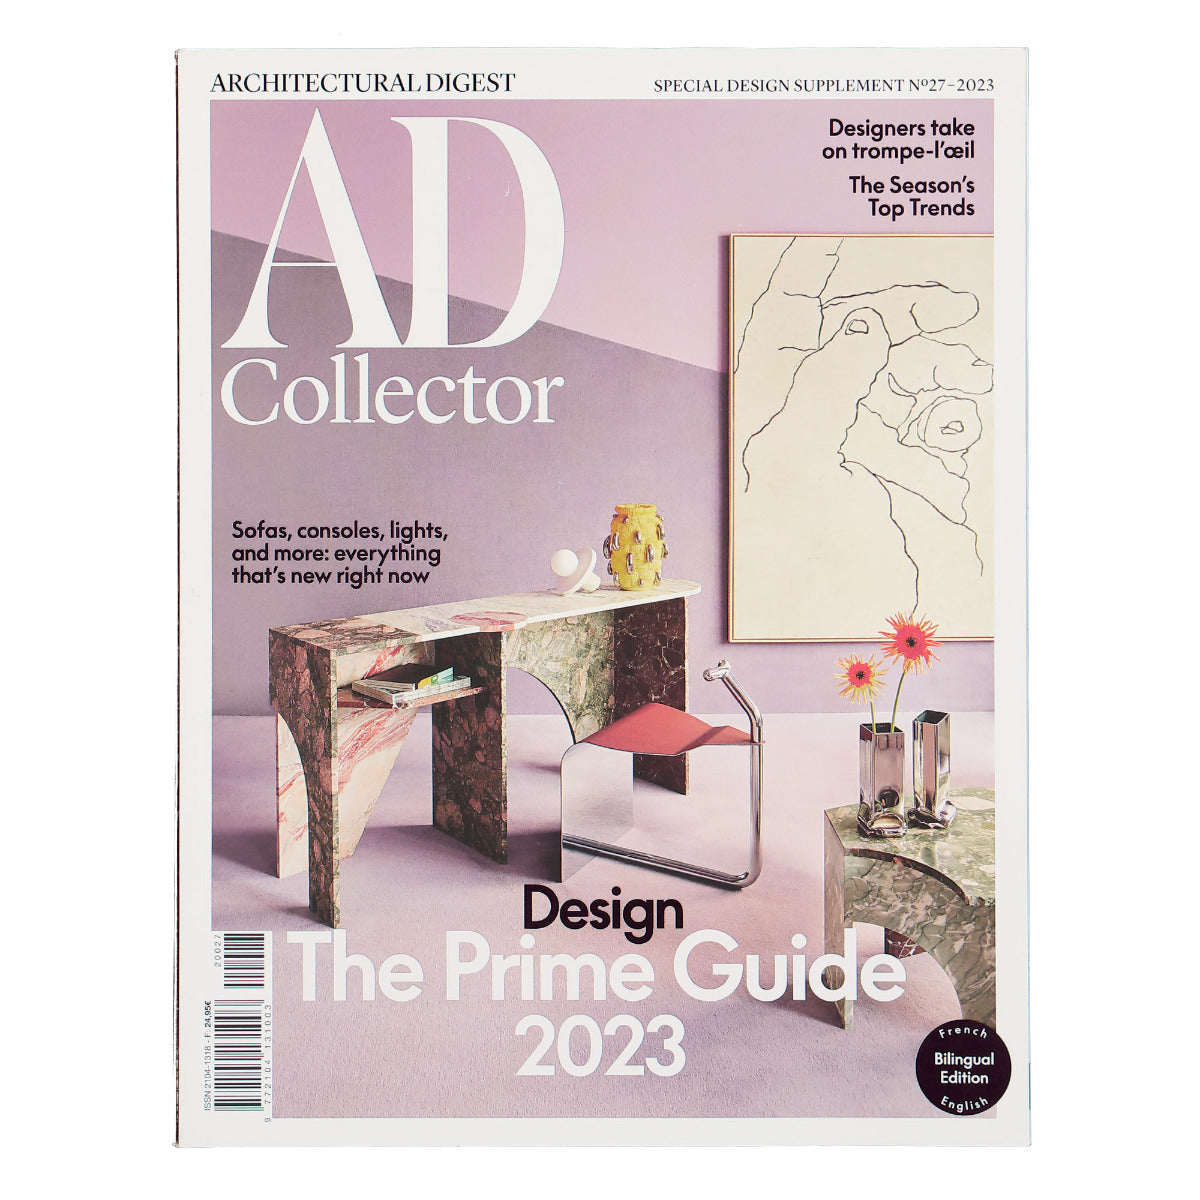 Special Design Supplement No.27 - 2023